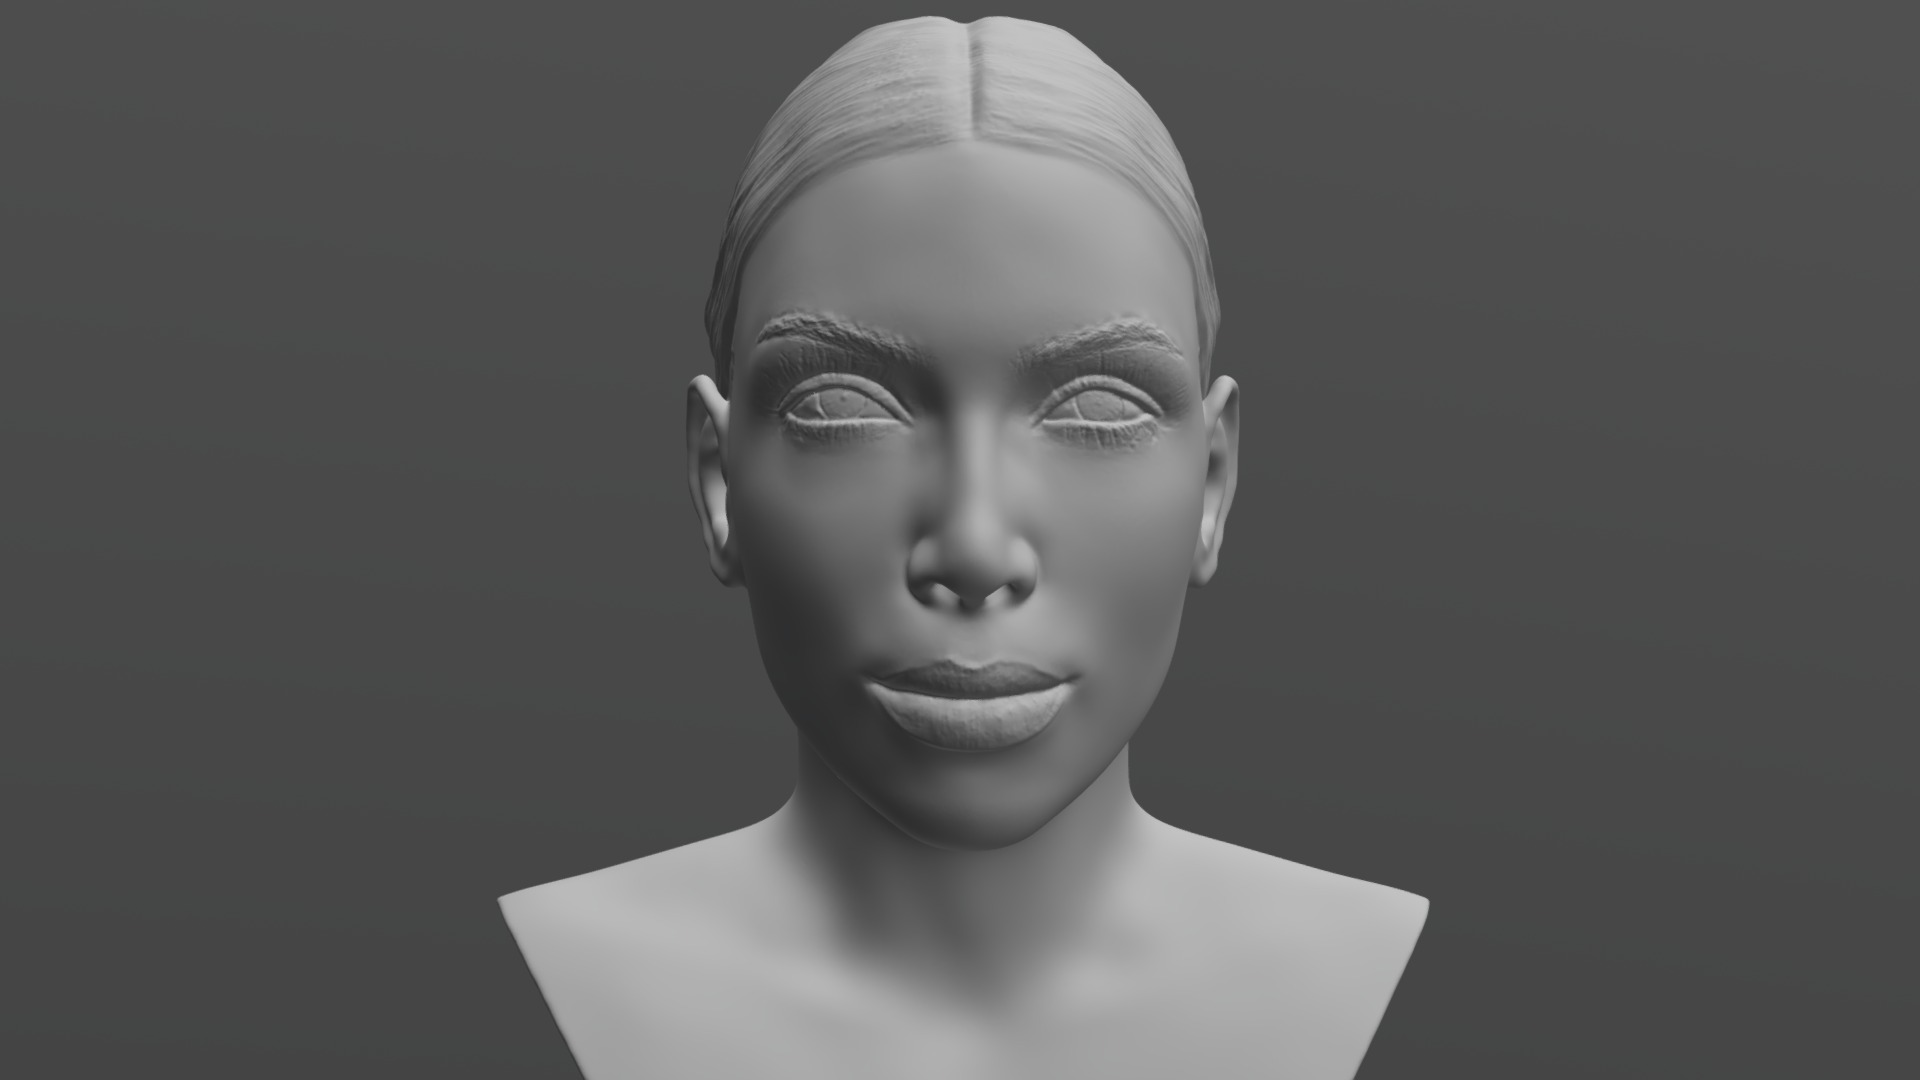 3D model Kim Kardashian bust for 3D printing - This is a 3D model of the Kim Kardashian bust for 3D printing. The 3D model is about a person with a white shirt.